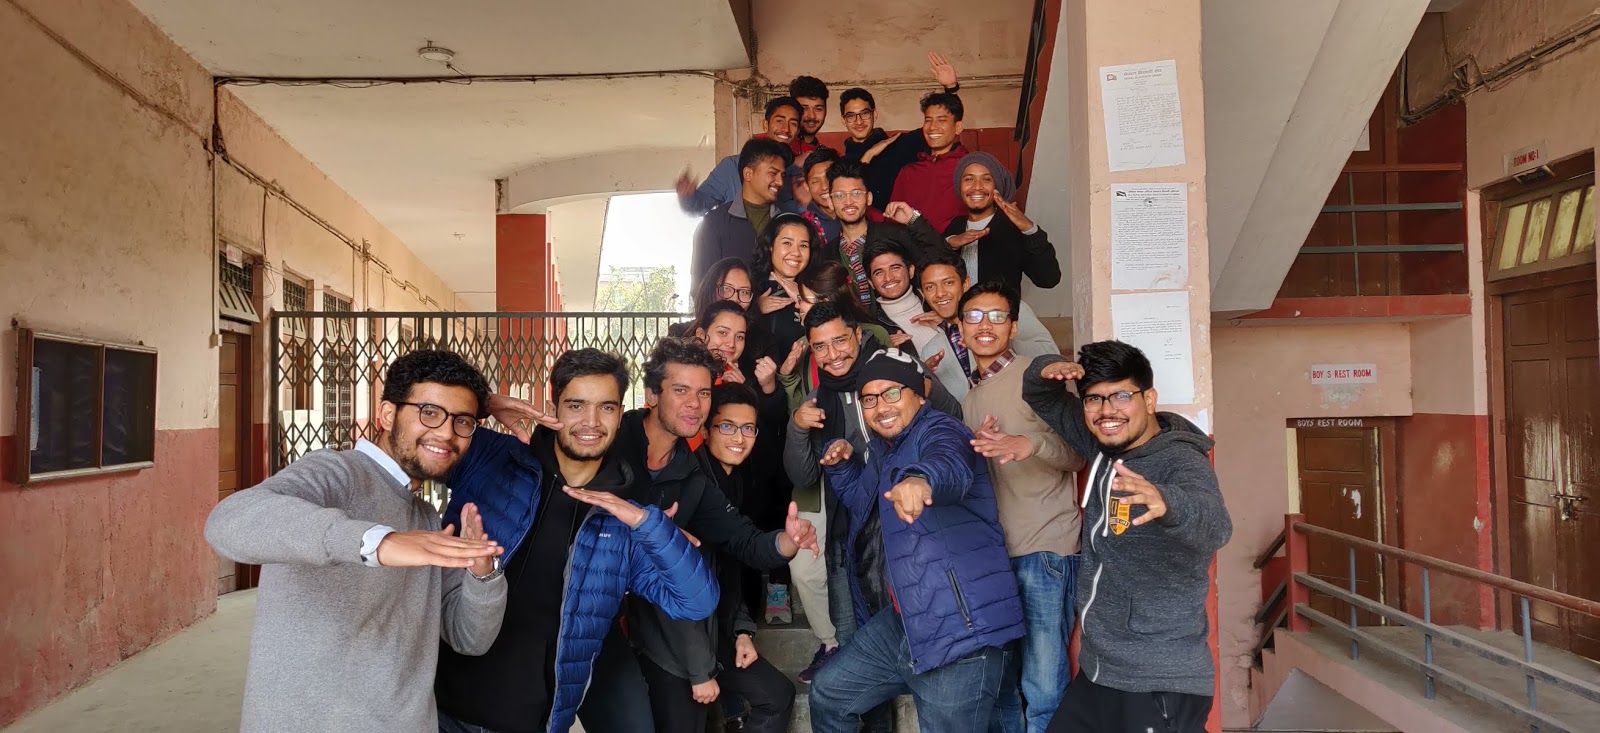 Microsoft Student Partners Meetup Nepal 2020